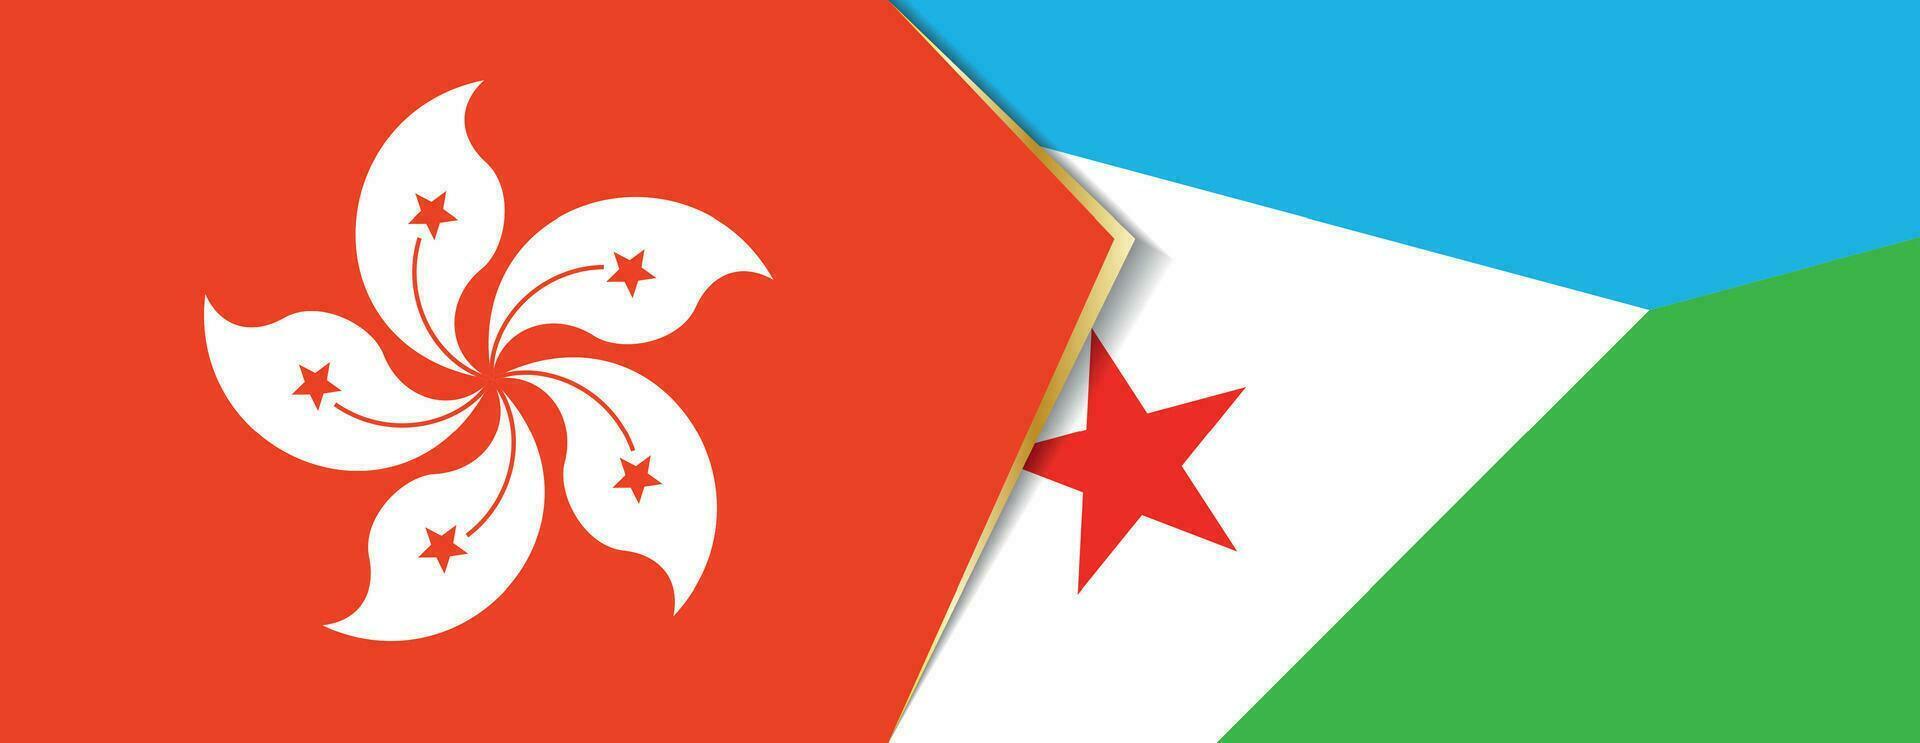 Hong Kong and Djibouti flags, two vector flags.